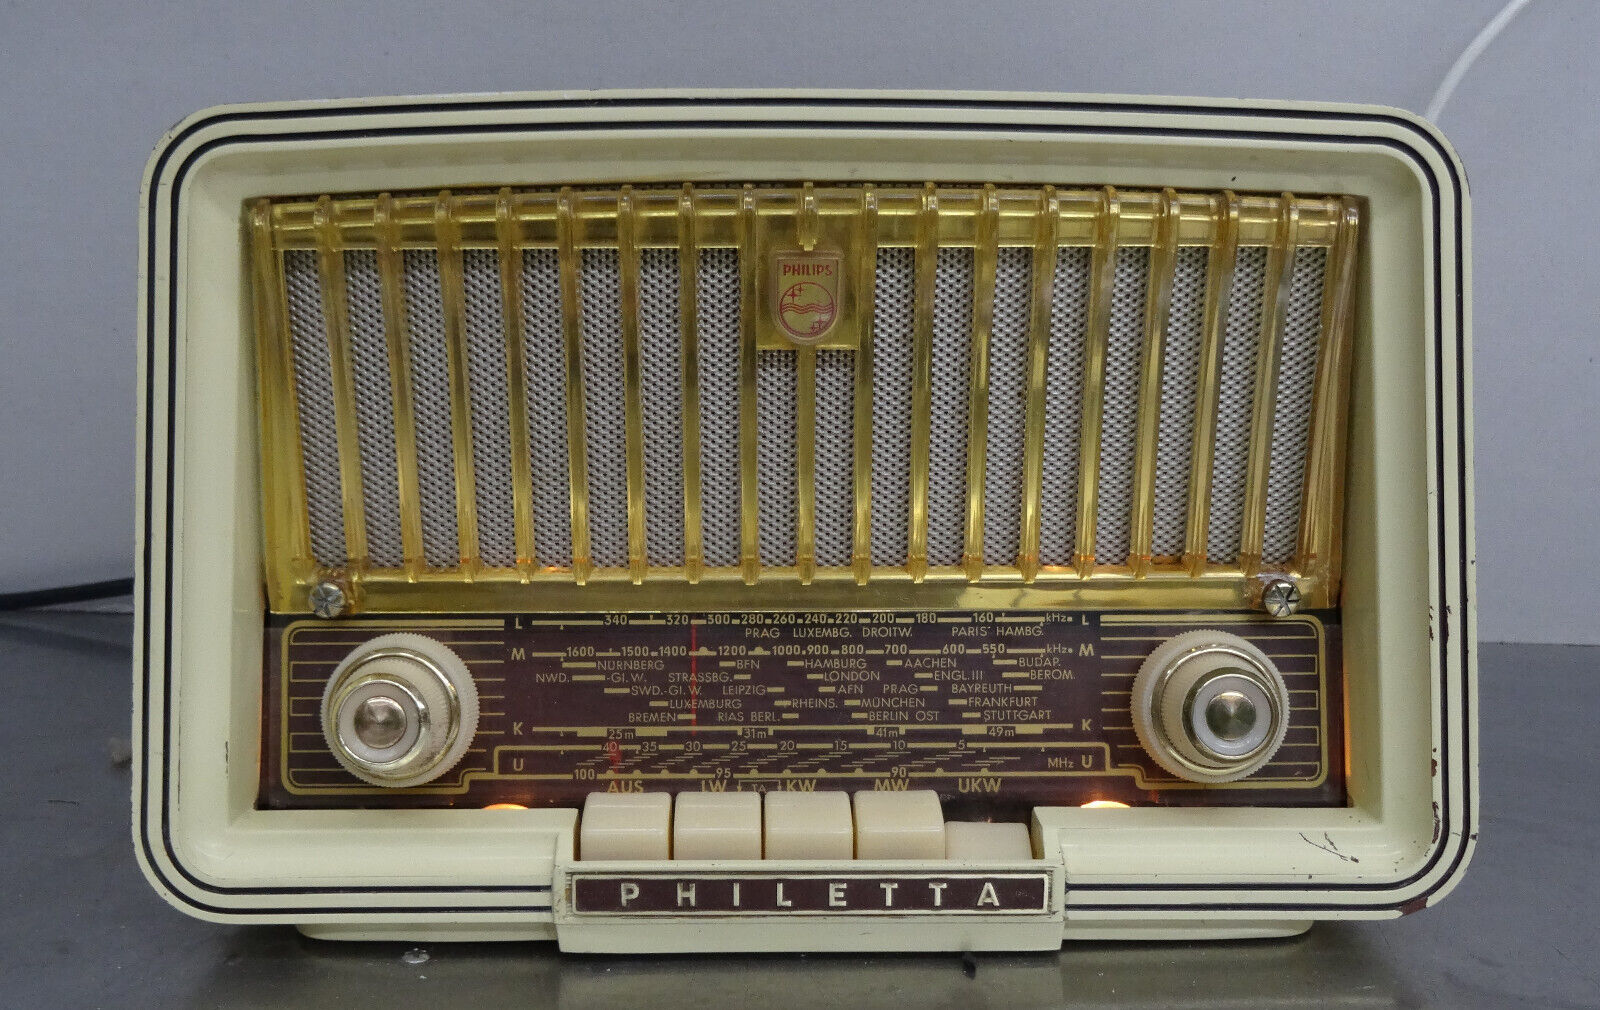 White Philips Philetta BD 273U Tube Radio Bakelite All Current Radio 1957-58